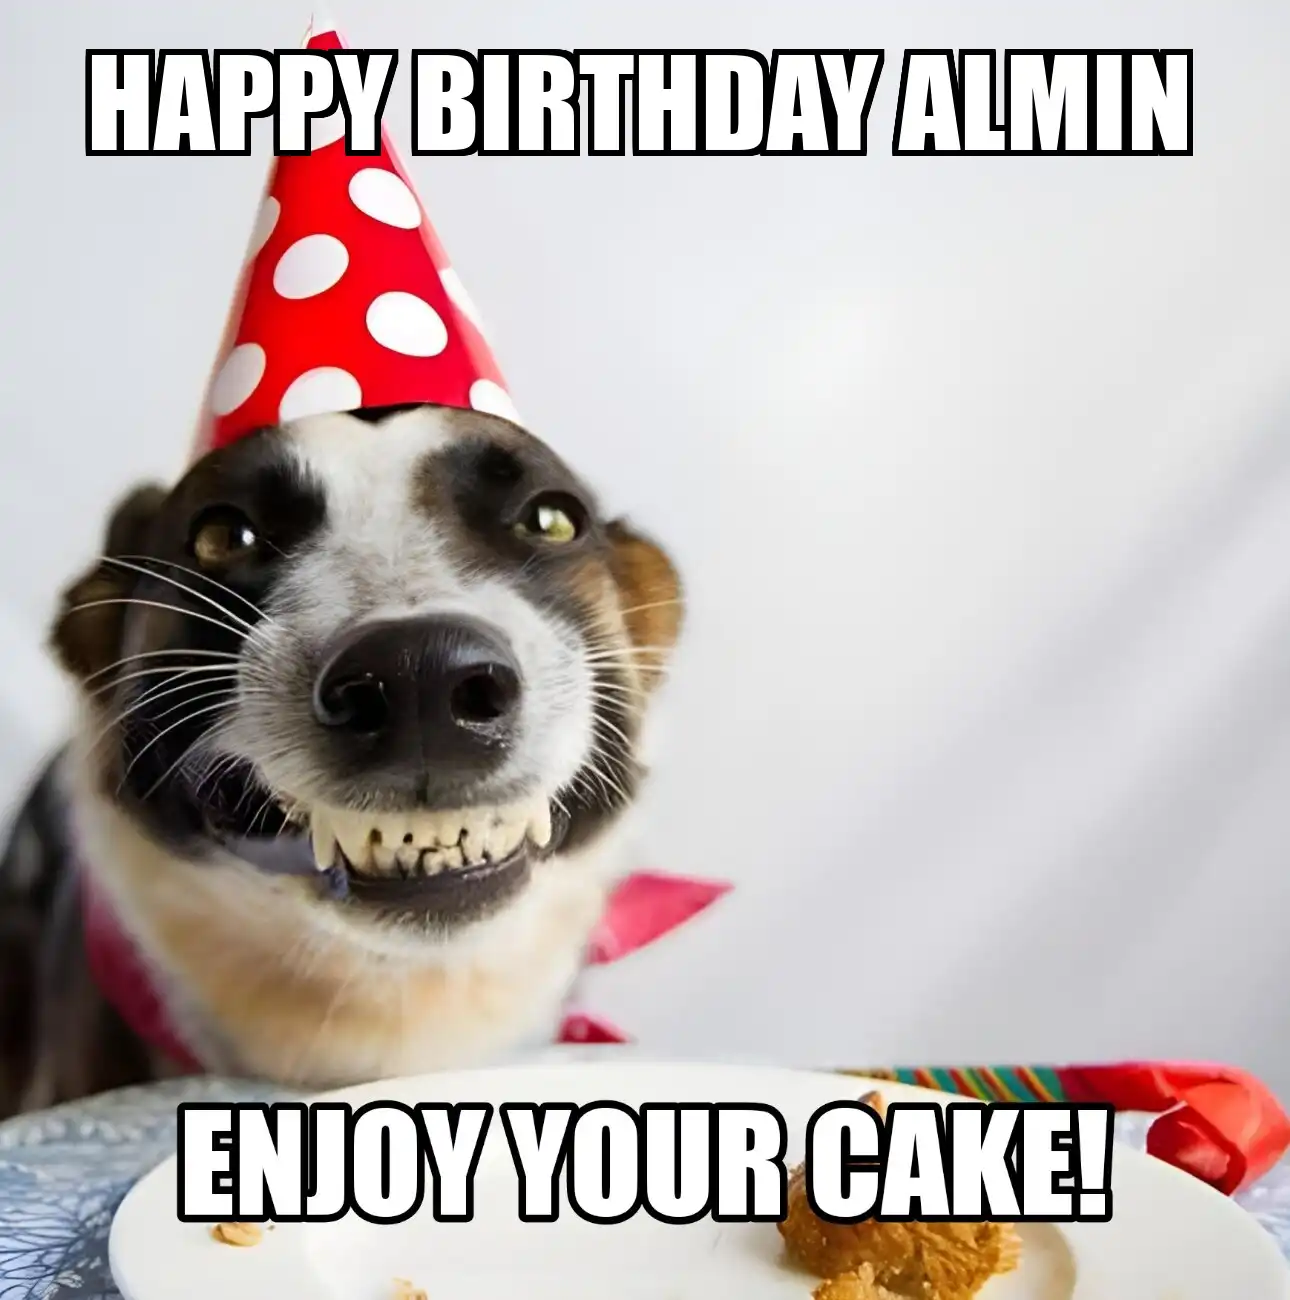 Happy Birthday Almin Enjoy Your Cake Dog Meme